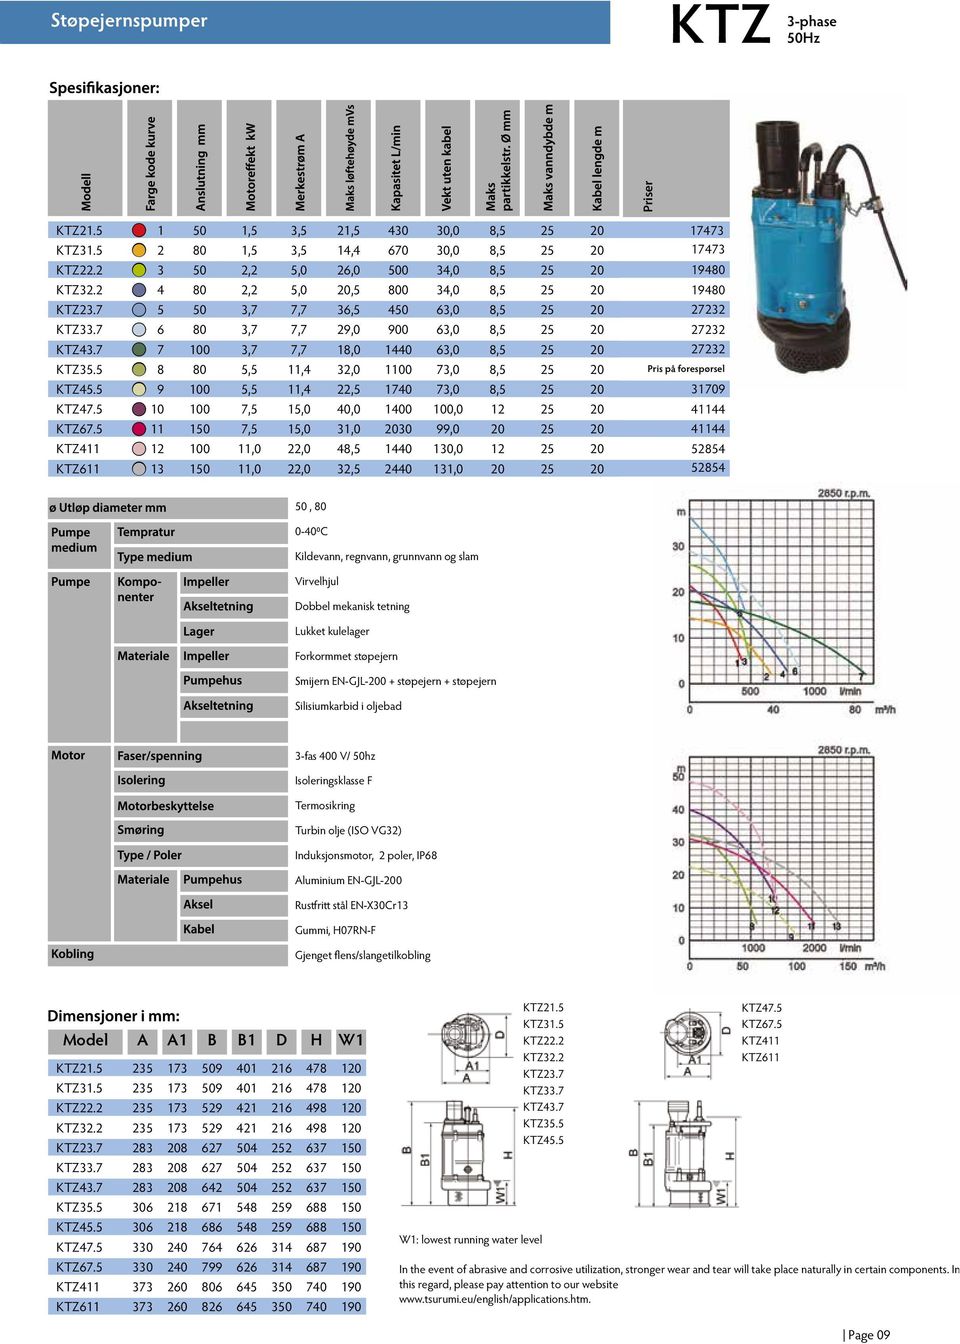 + støpejern + støpejern Silisiumkarbid i oljebad 3-fas 400 V/ 50hz Isoleringsklasse F Termosikring Turbin olje (ISO